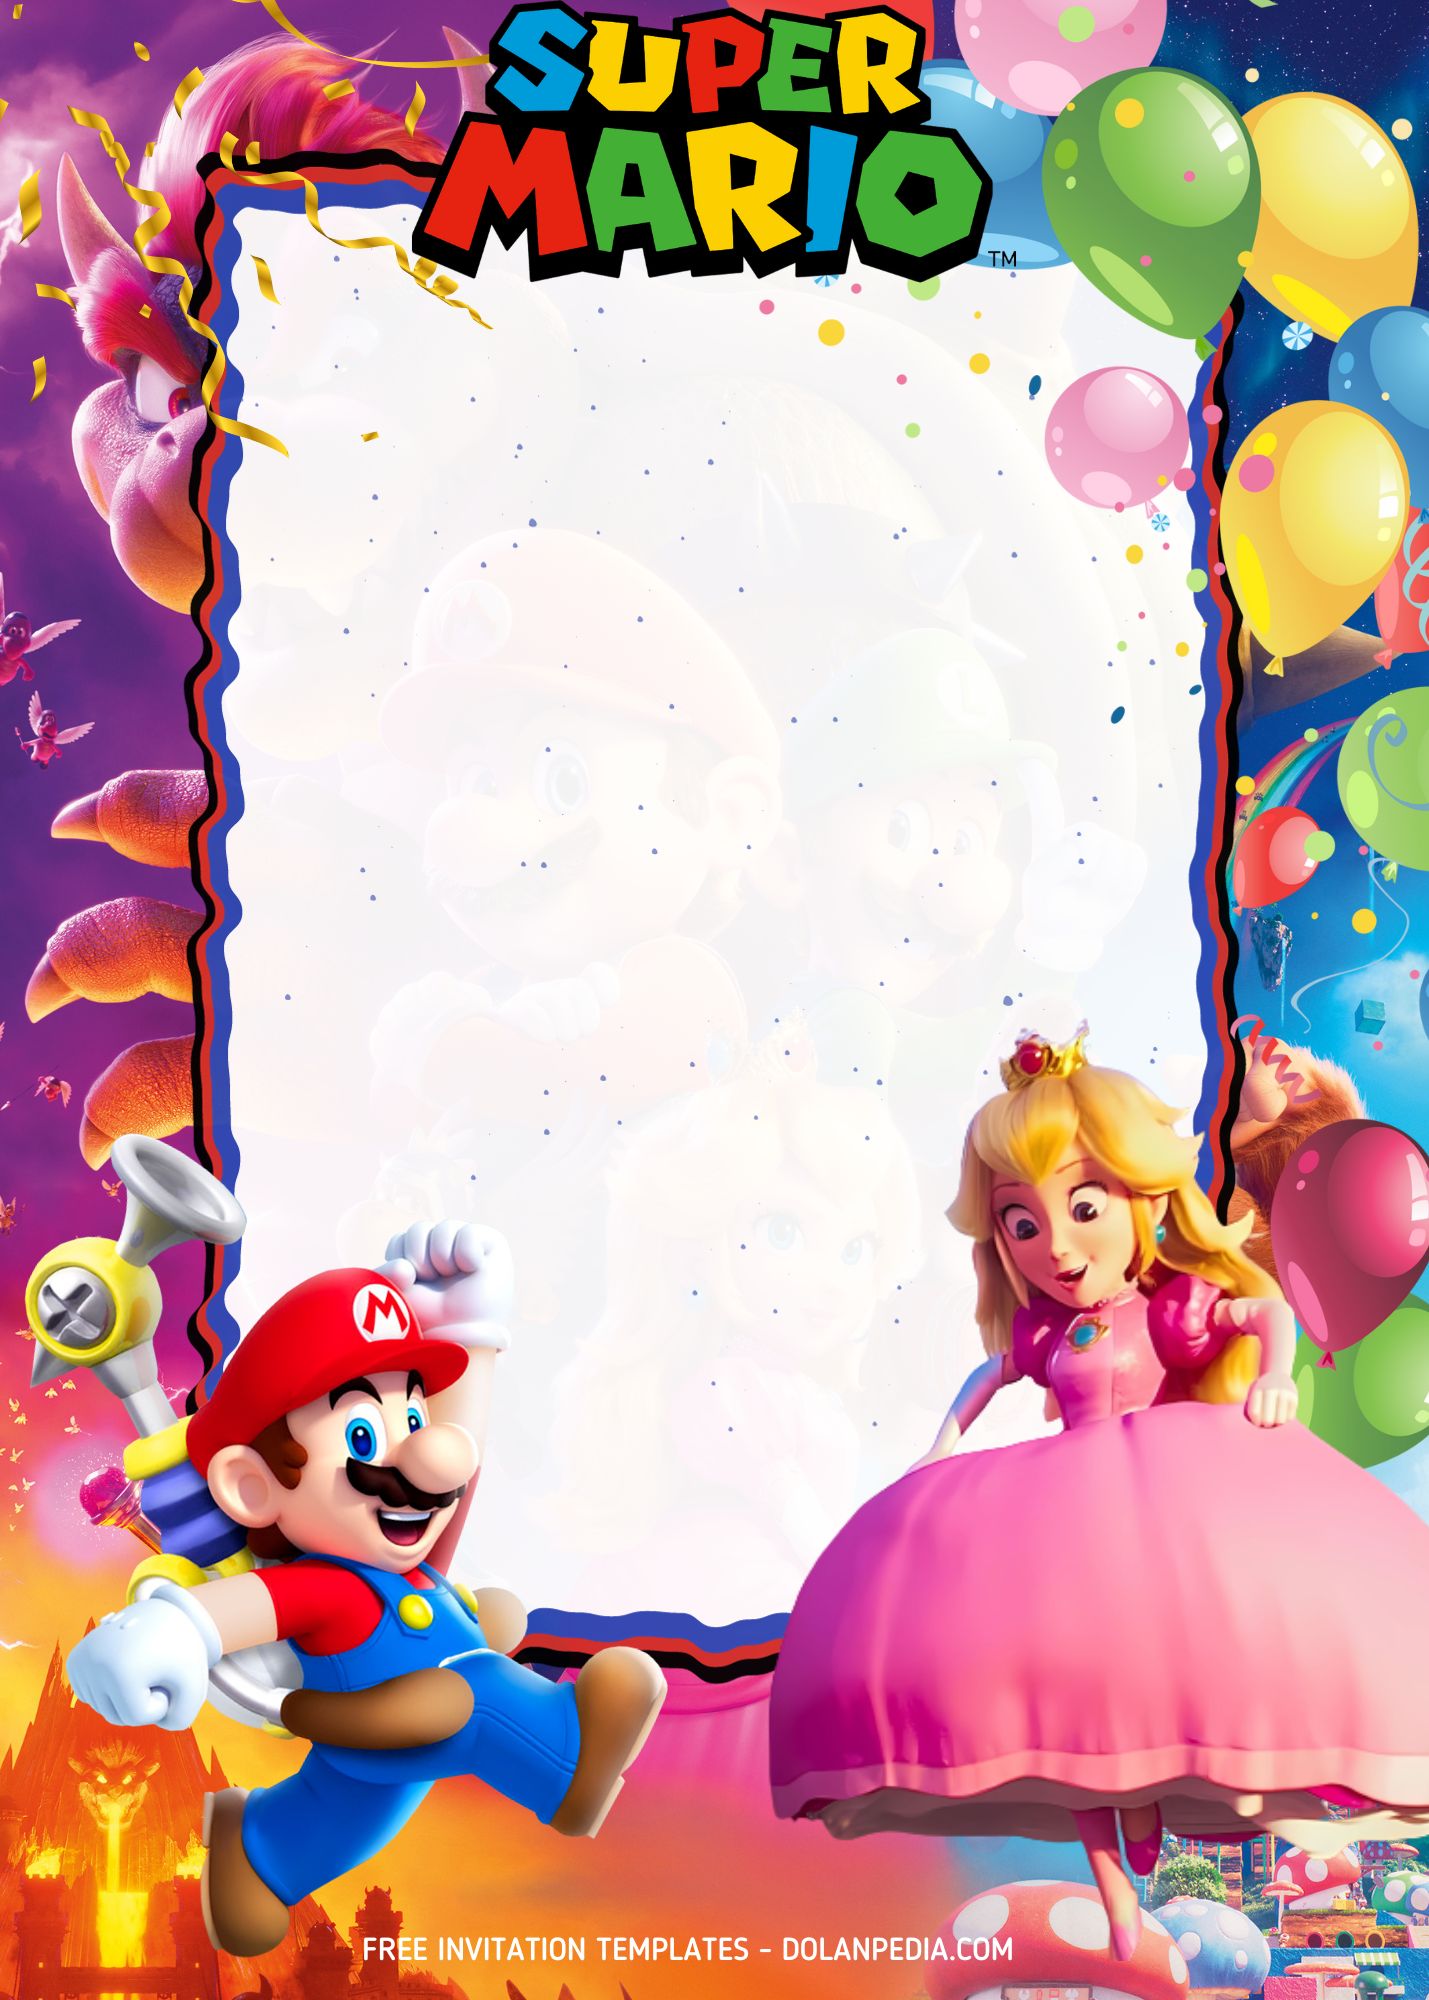 FREE Super Mario Adventure Party Invitation Templates